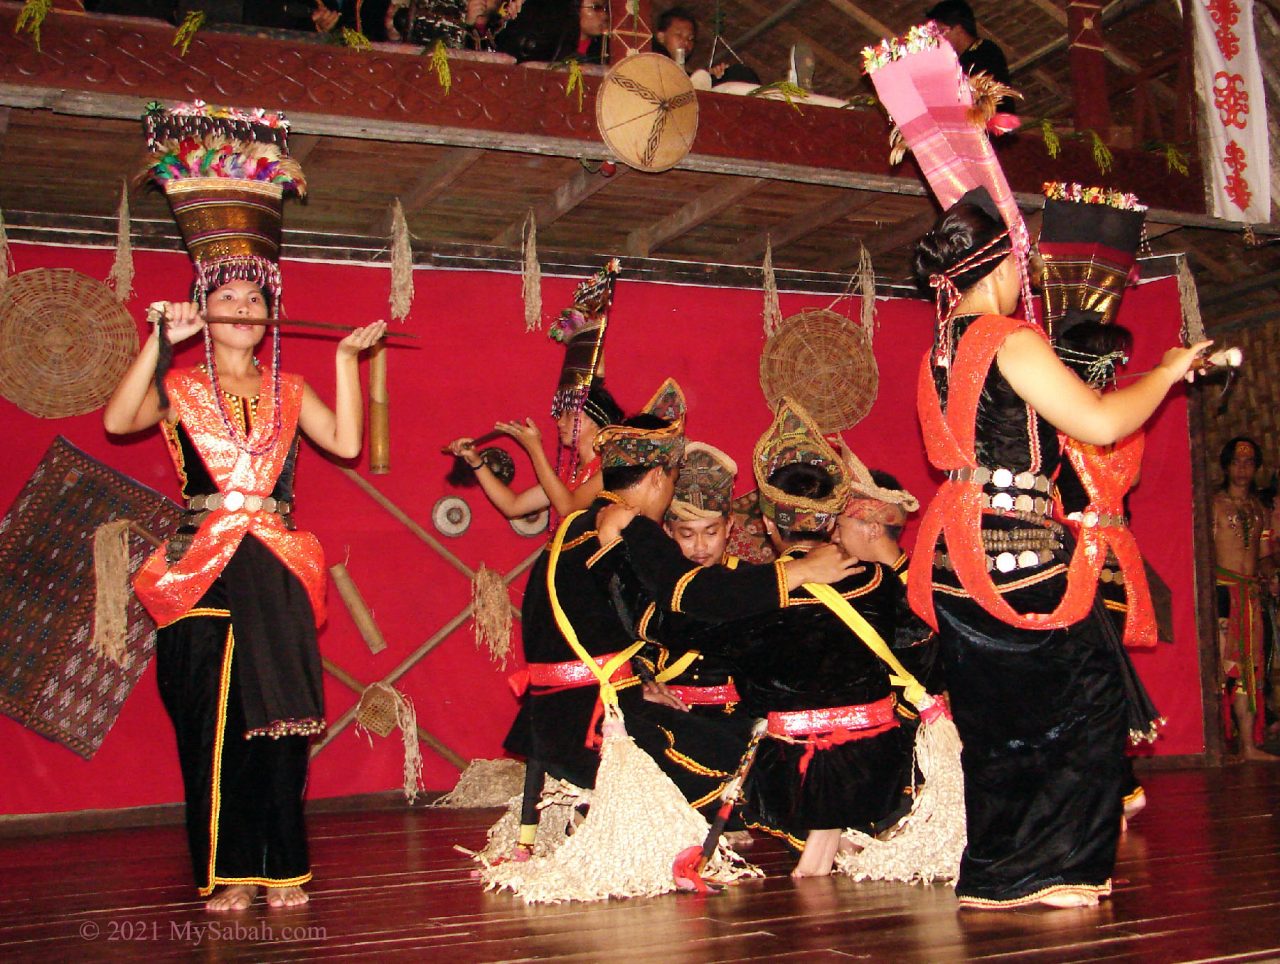 Sumazau as a sacred dance